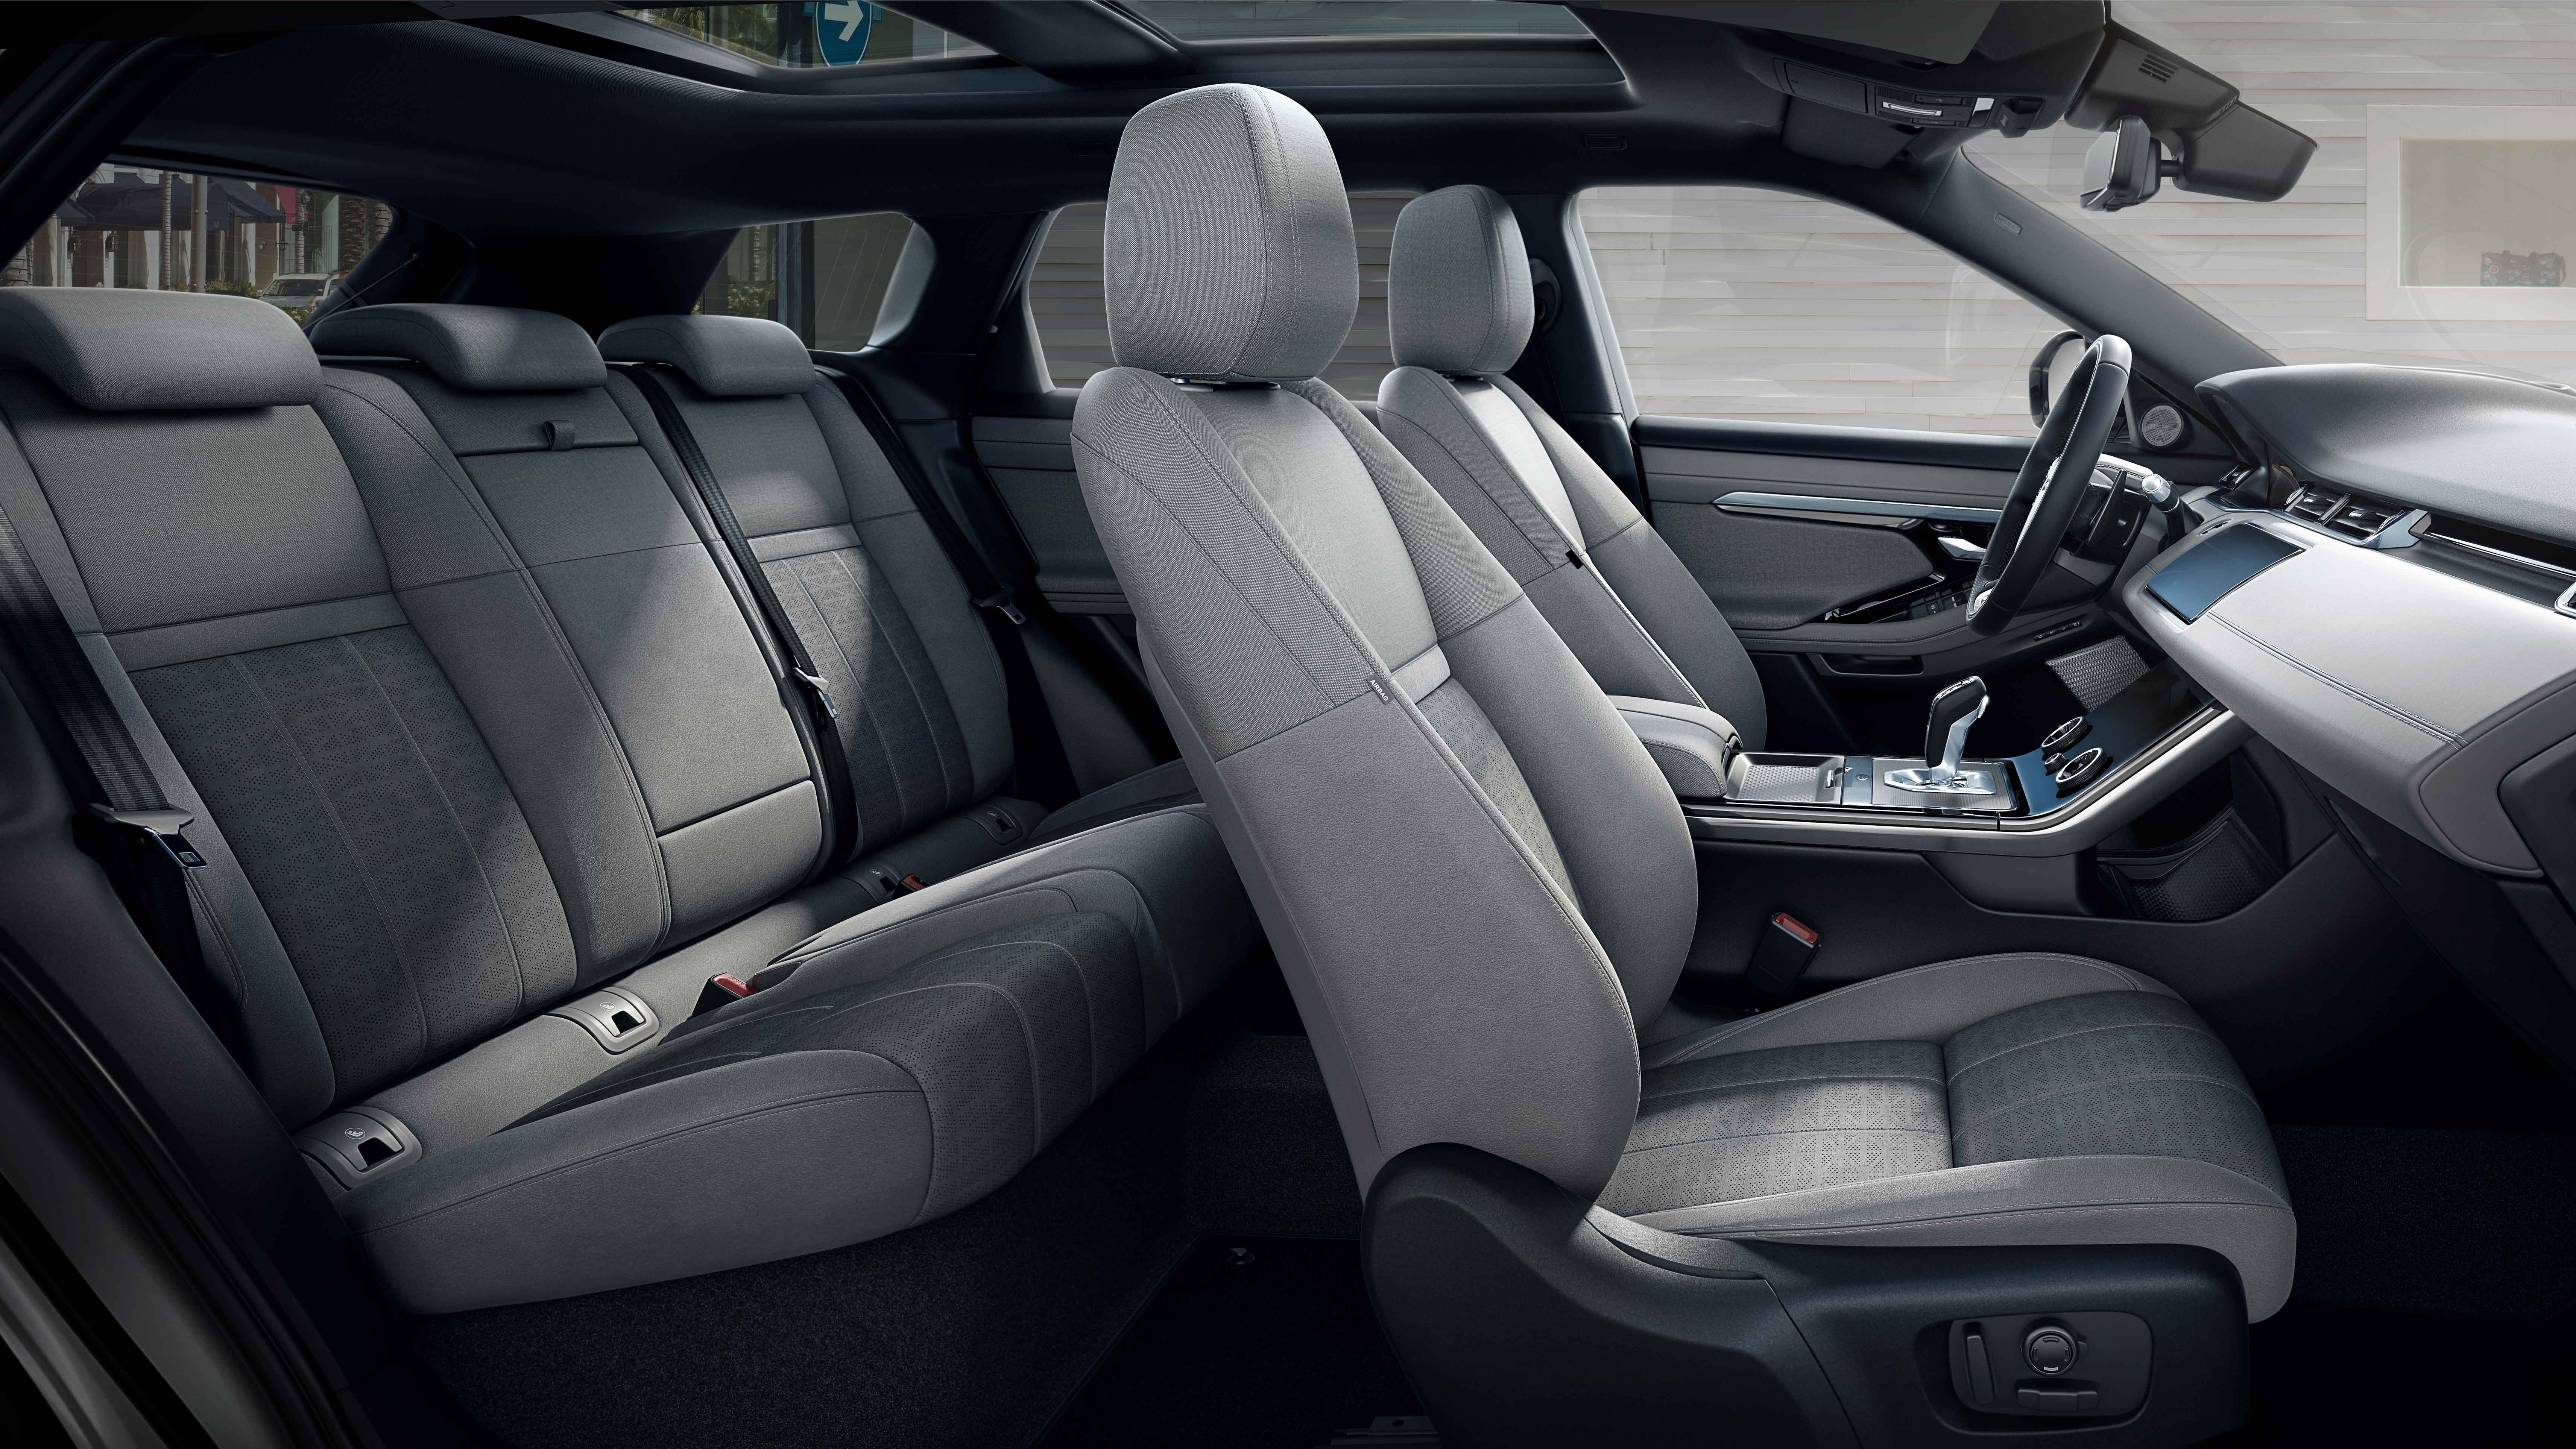 Range Rover Evoque seats side view